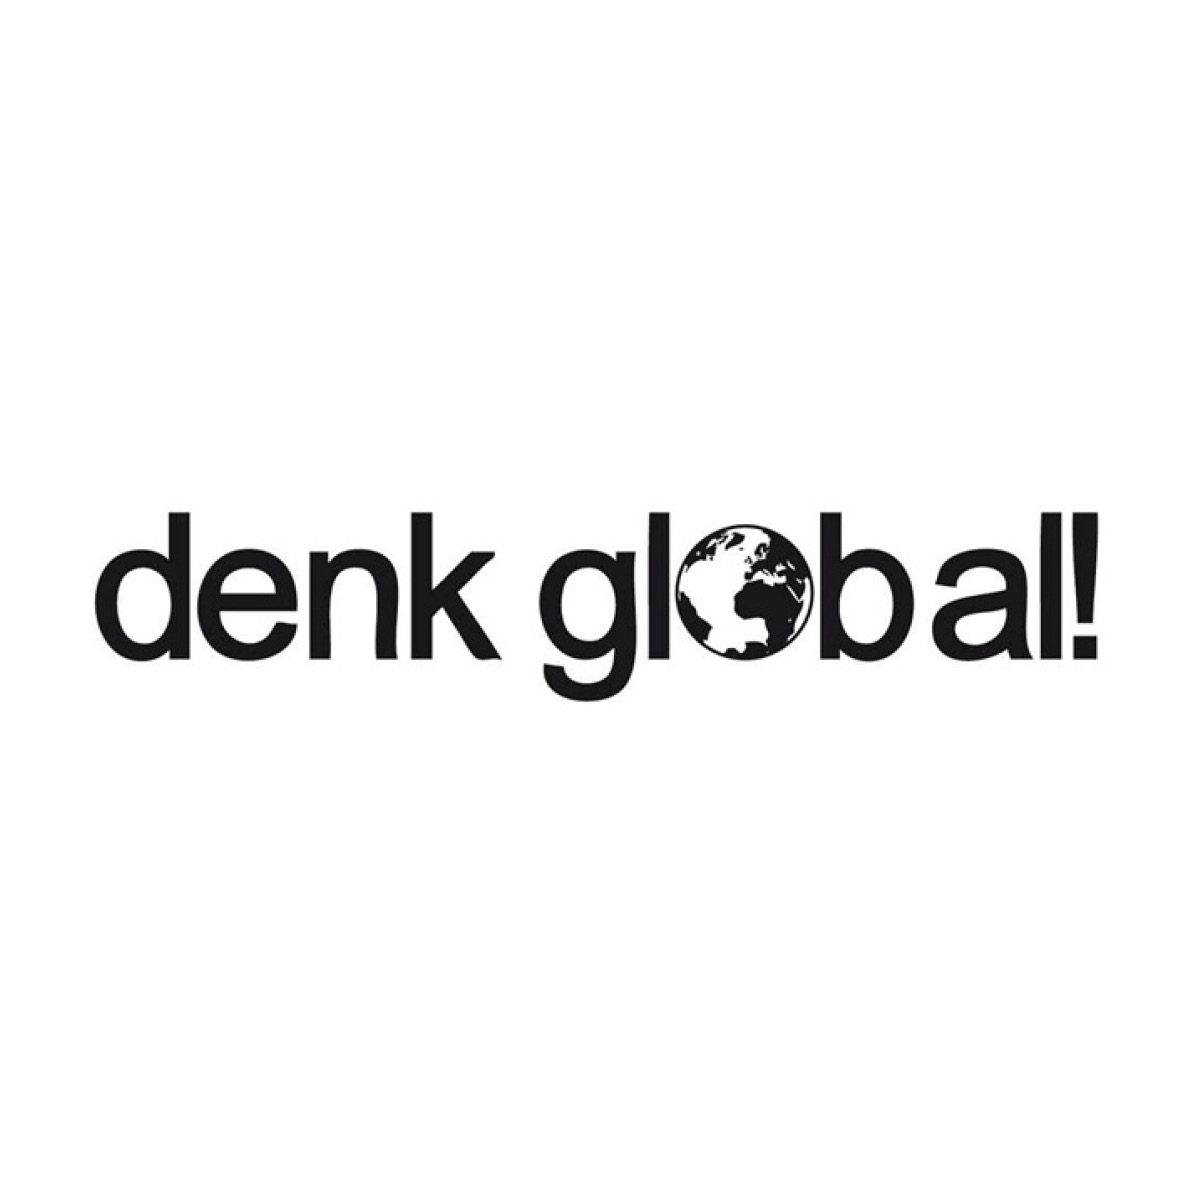 denk global Logo